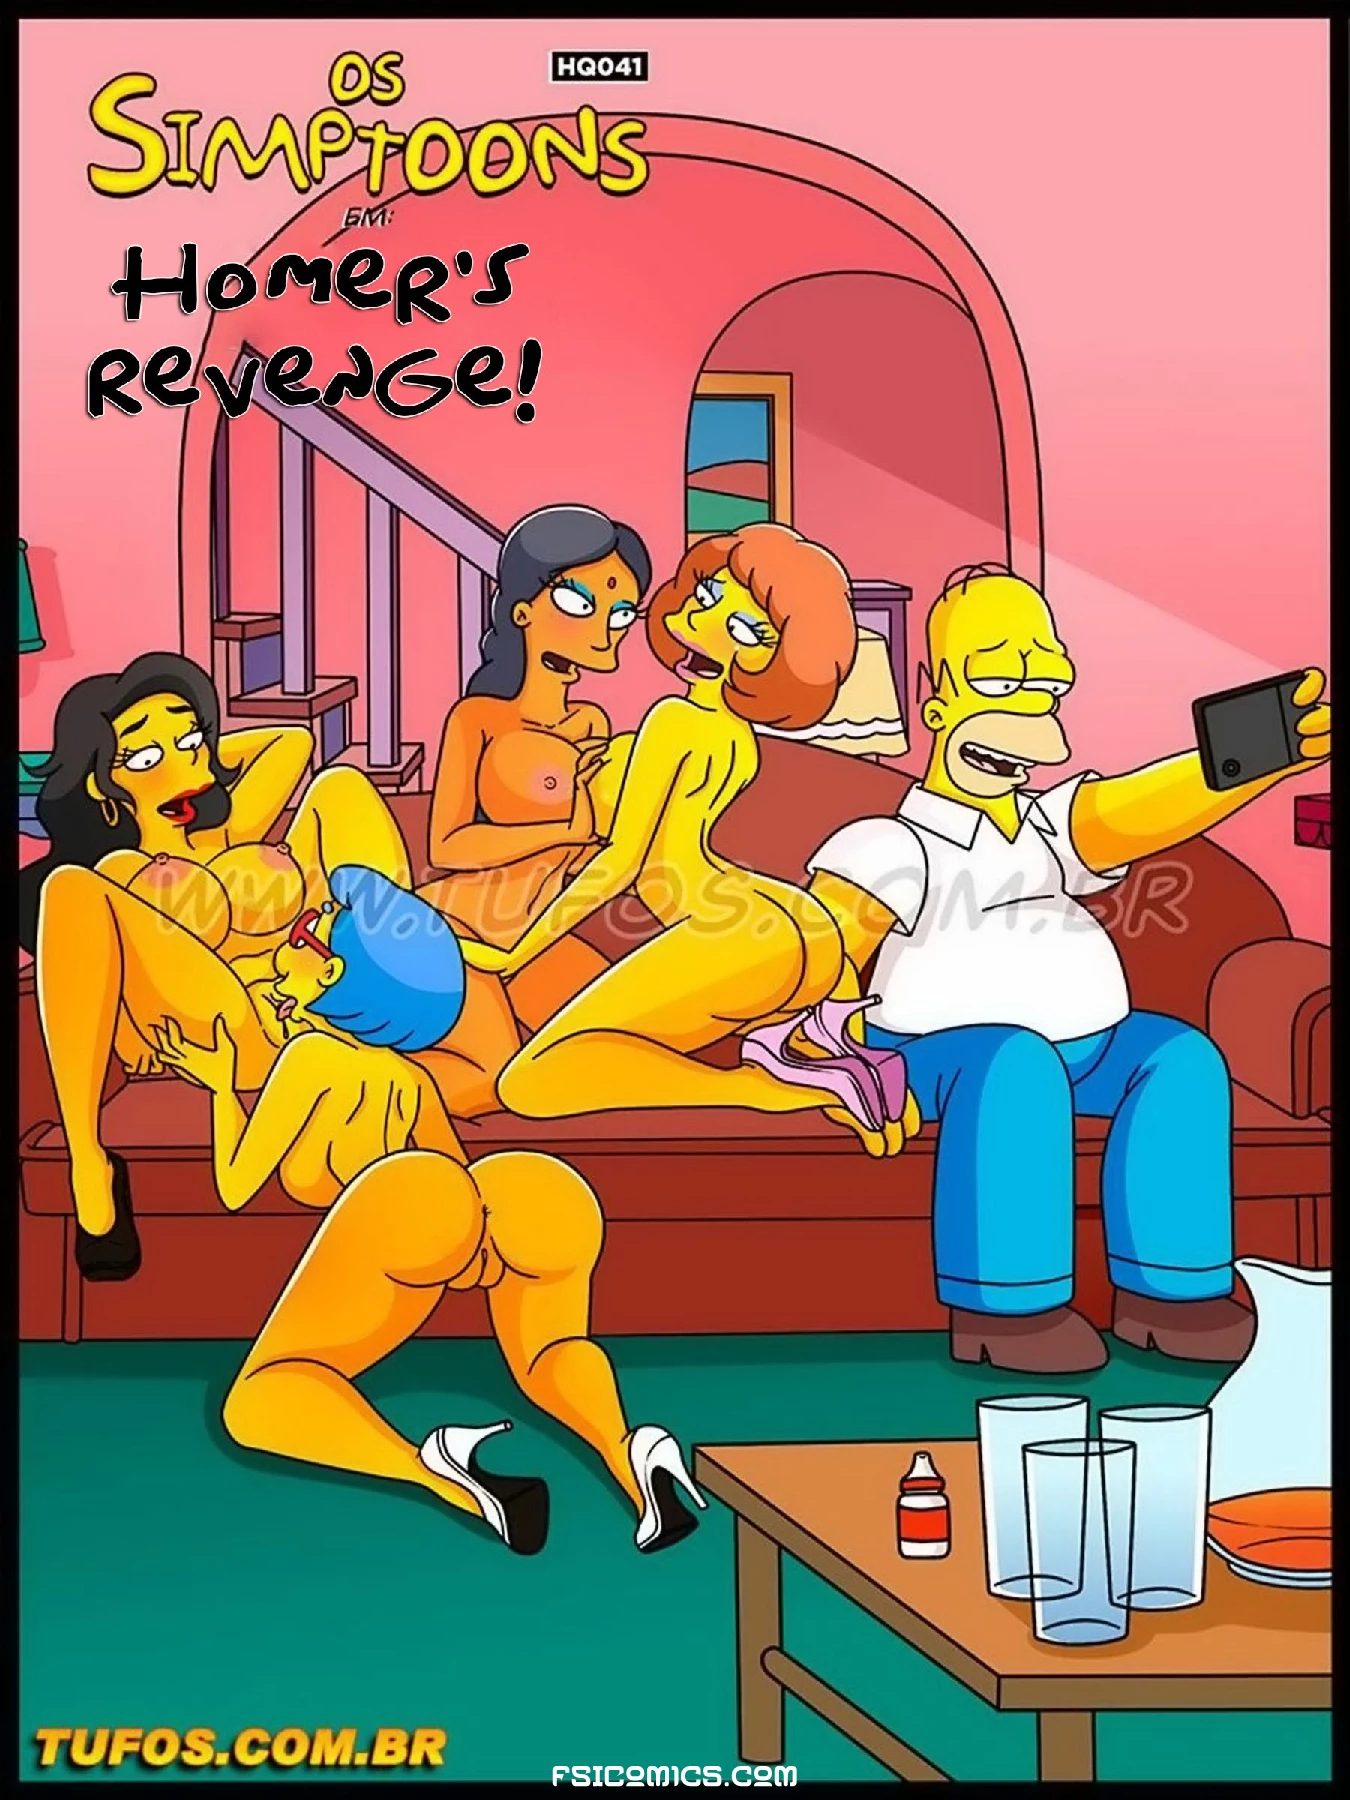 The Simpsons Chapter 41 – Homer's Revenge! – WC TF - 7 - FSIComics